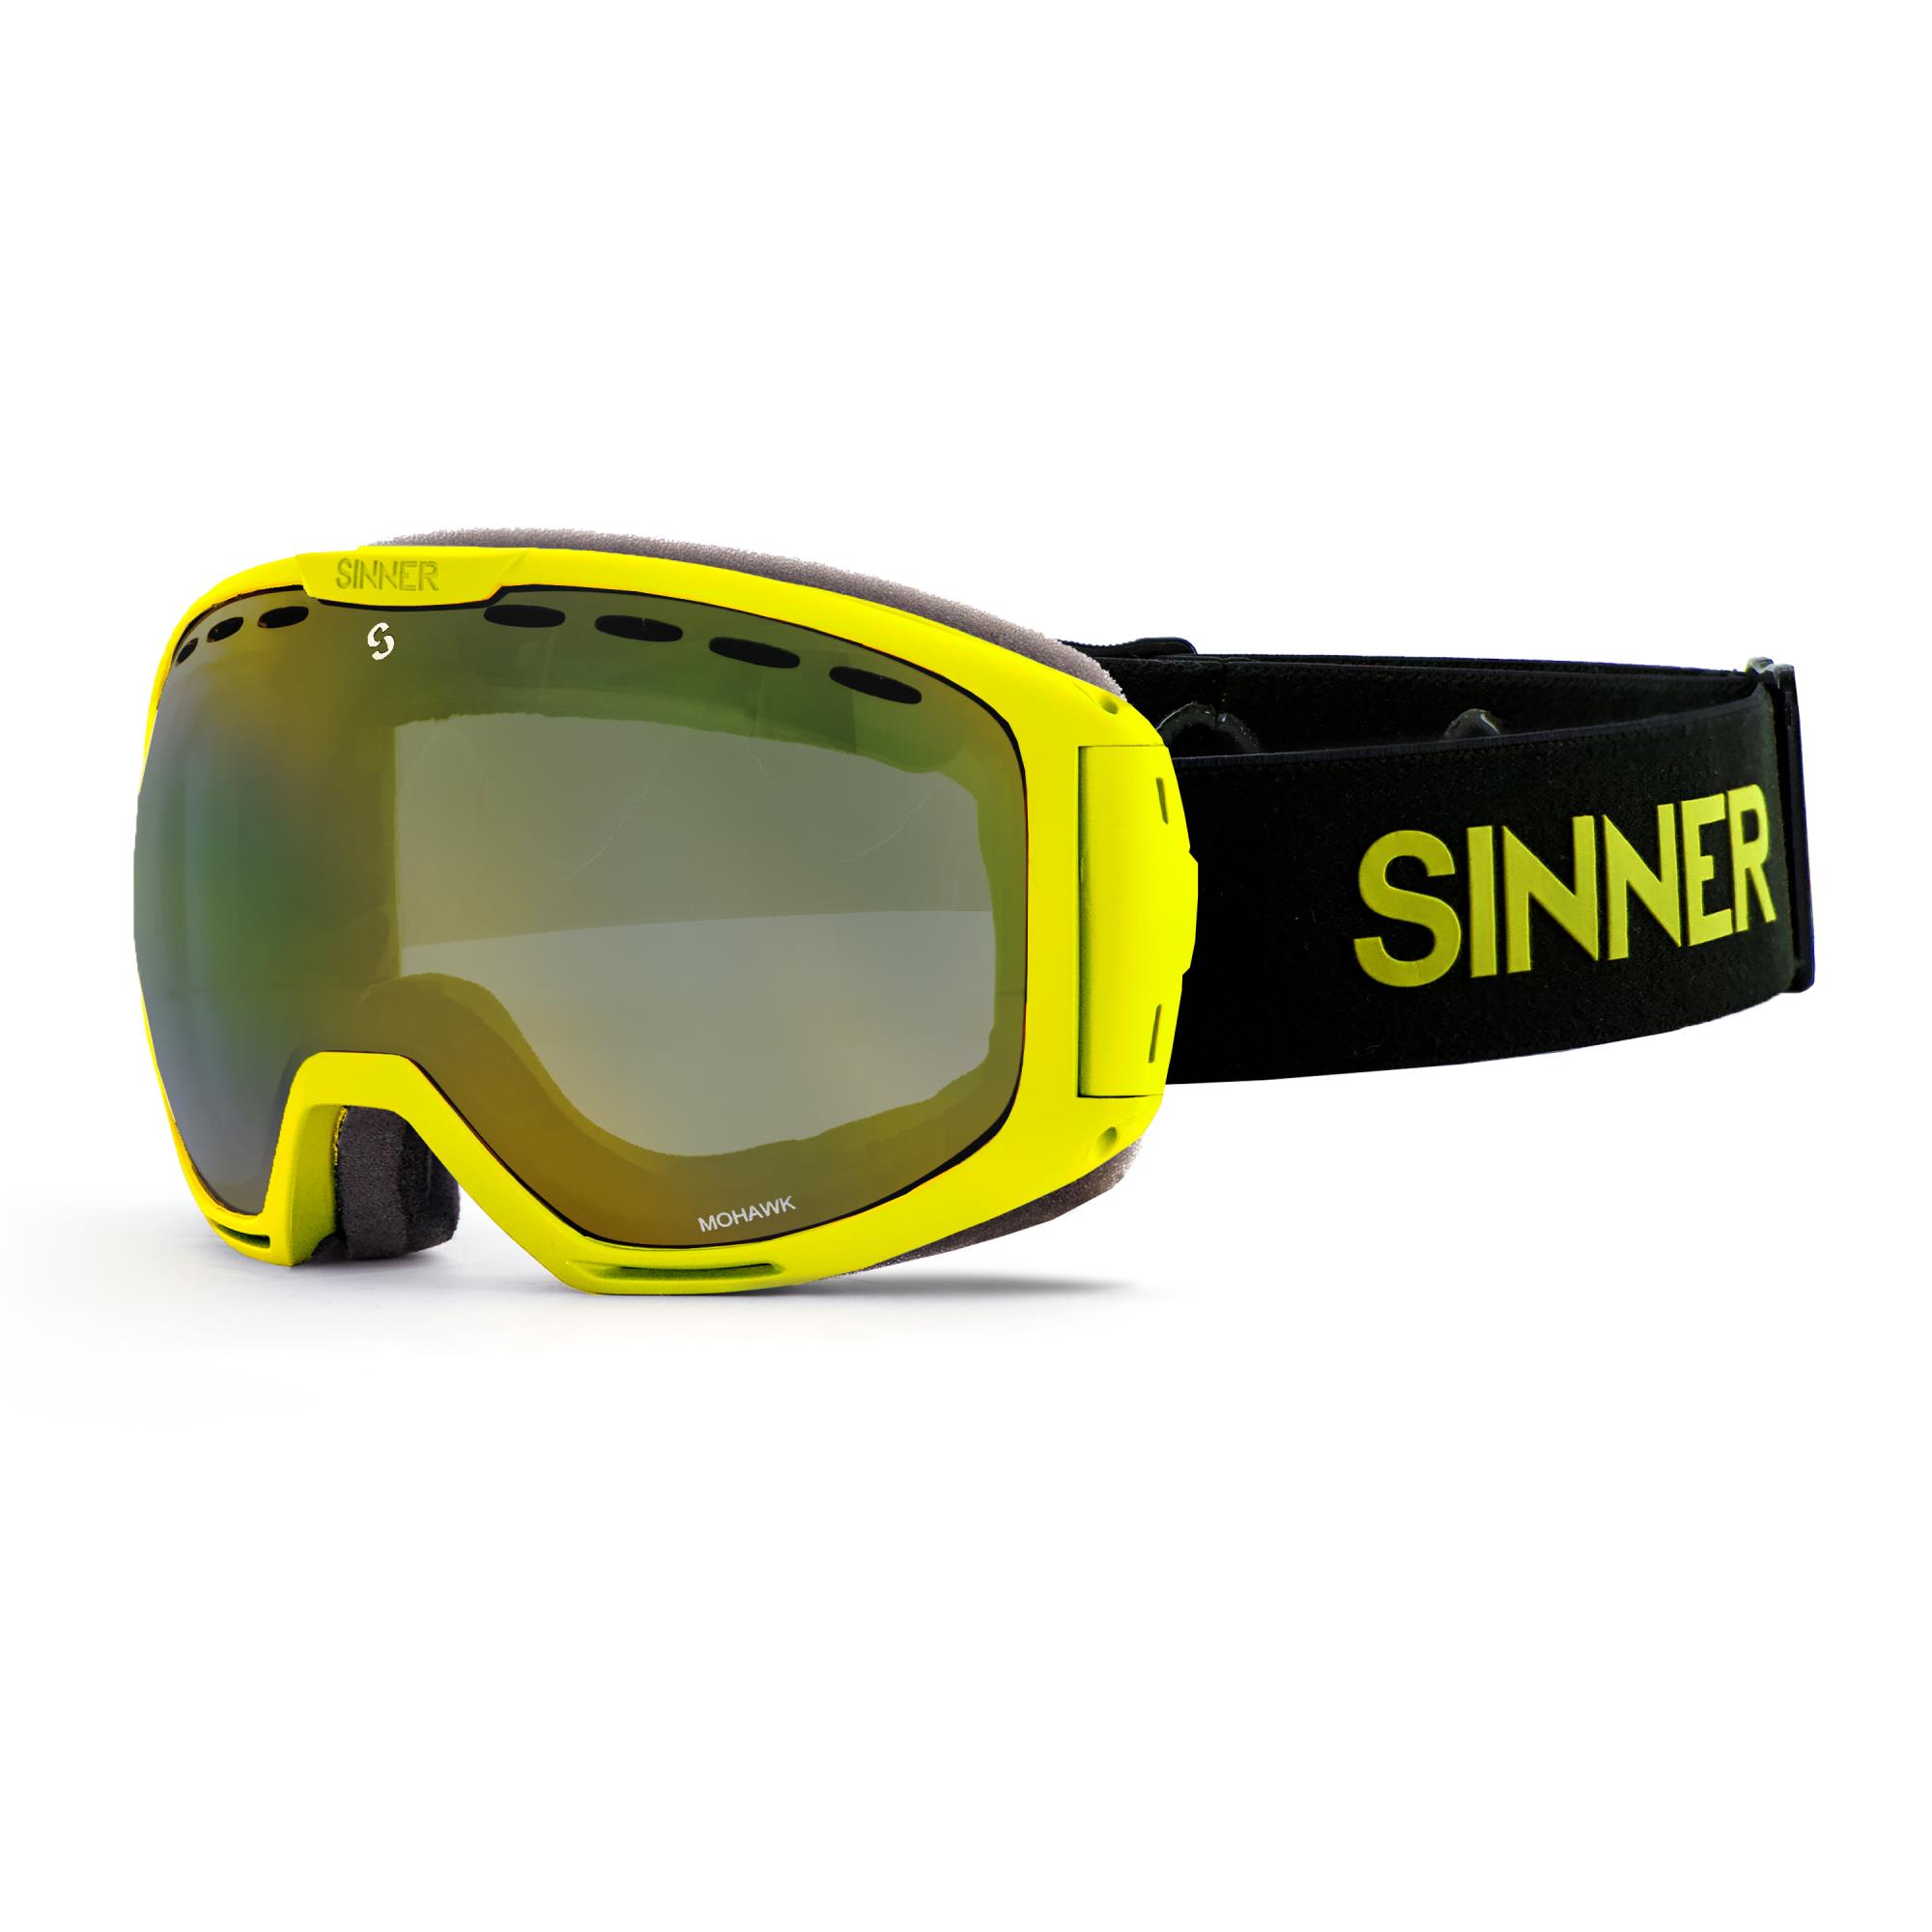 Sinner Mohawk Skibril - Mat Neon Geel + GRATIS EXTRA LENS | Categorie 3